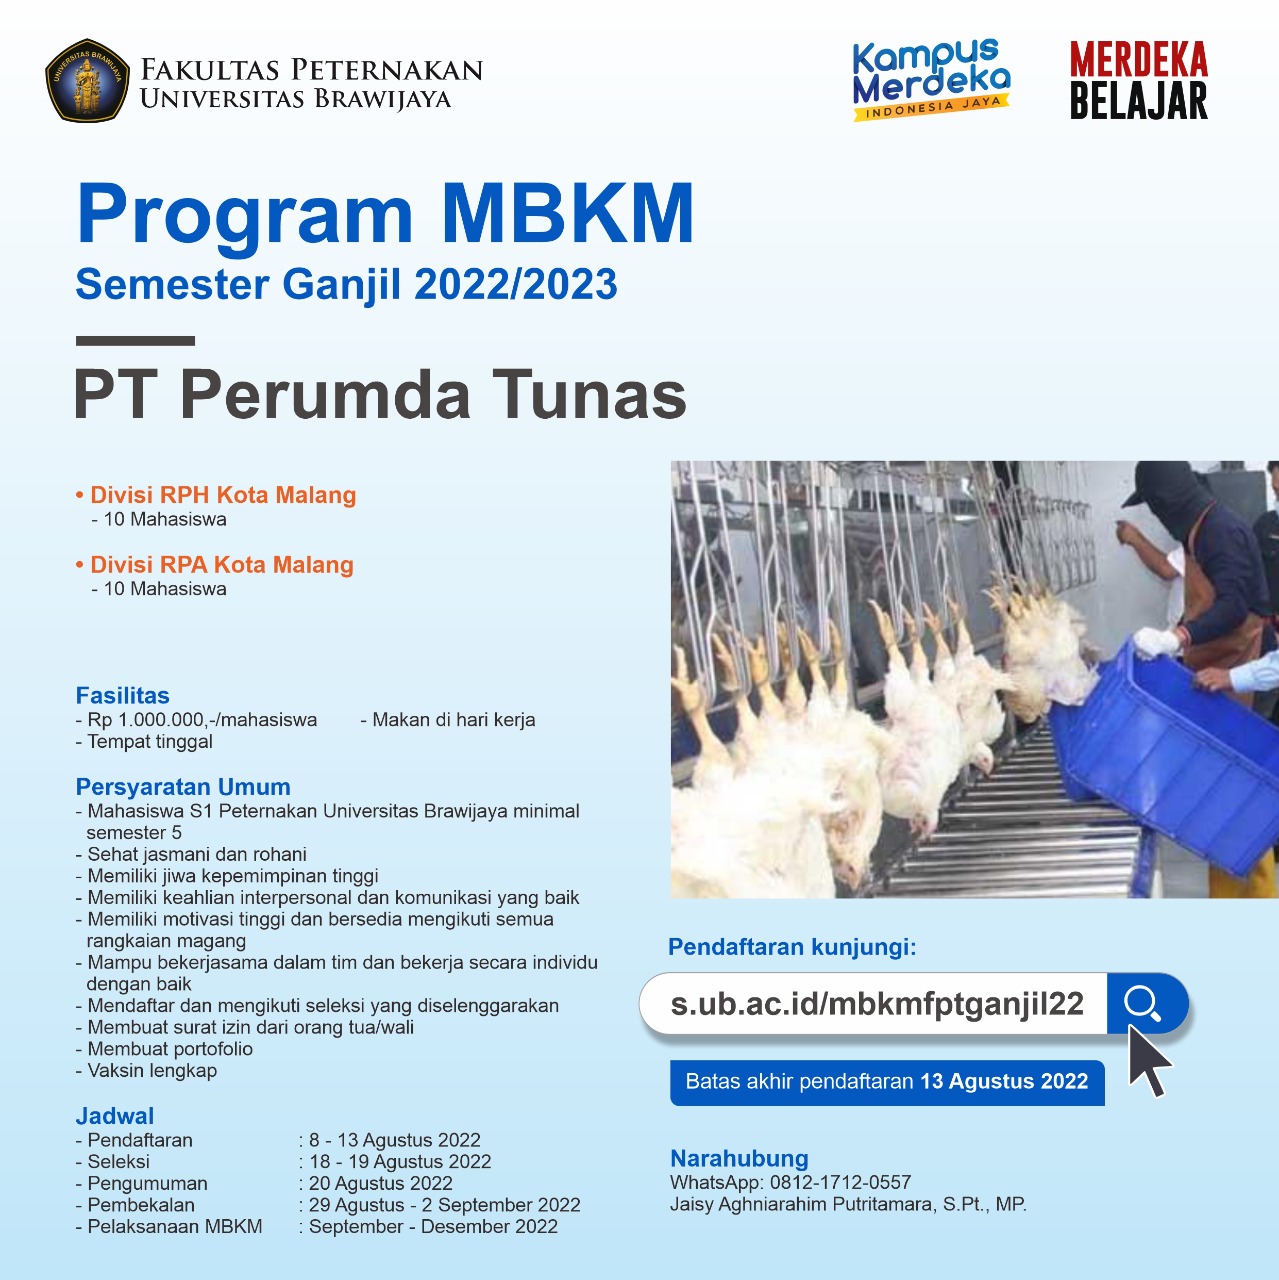 MBKM Program Odd Semester 2022/2023 PT. Perumda Tunas